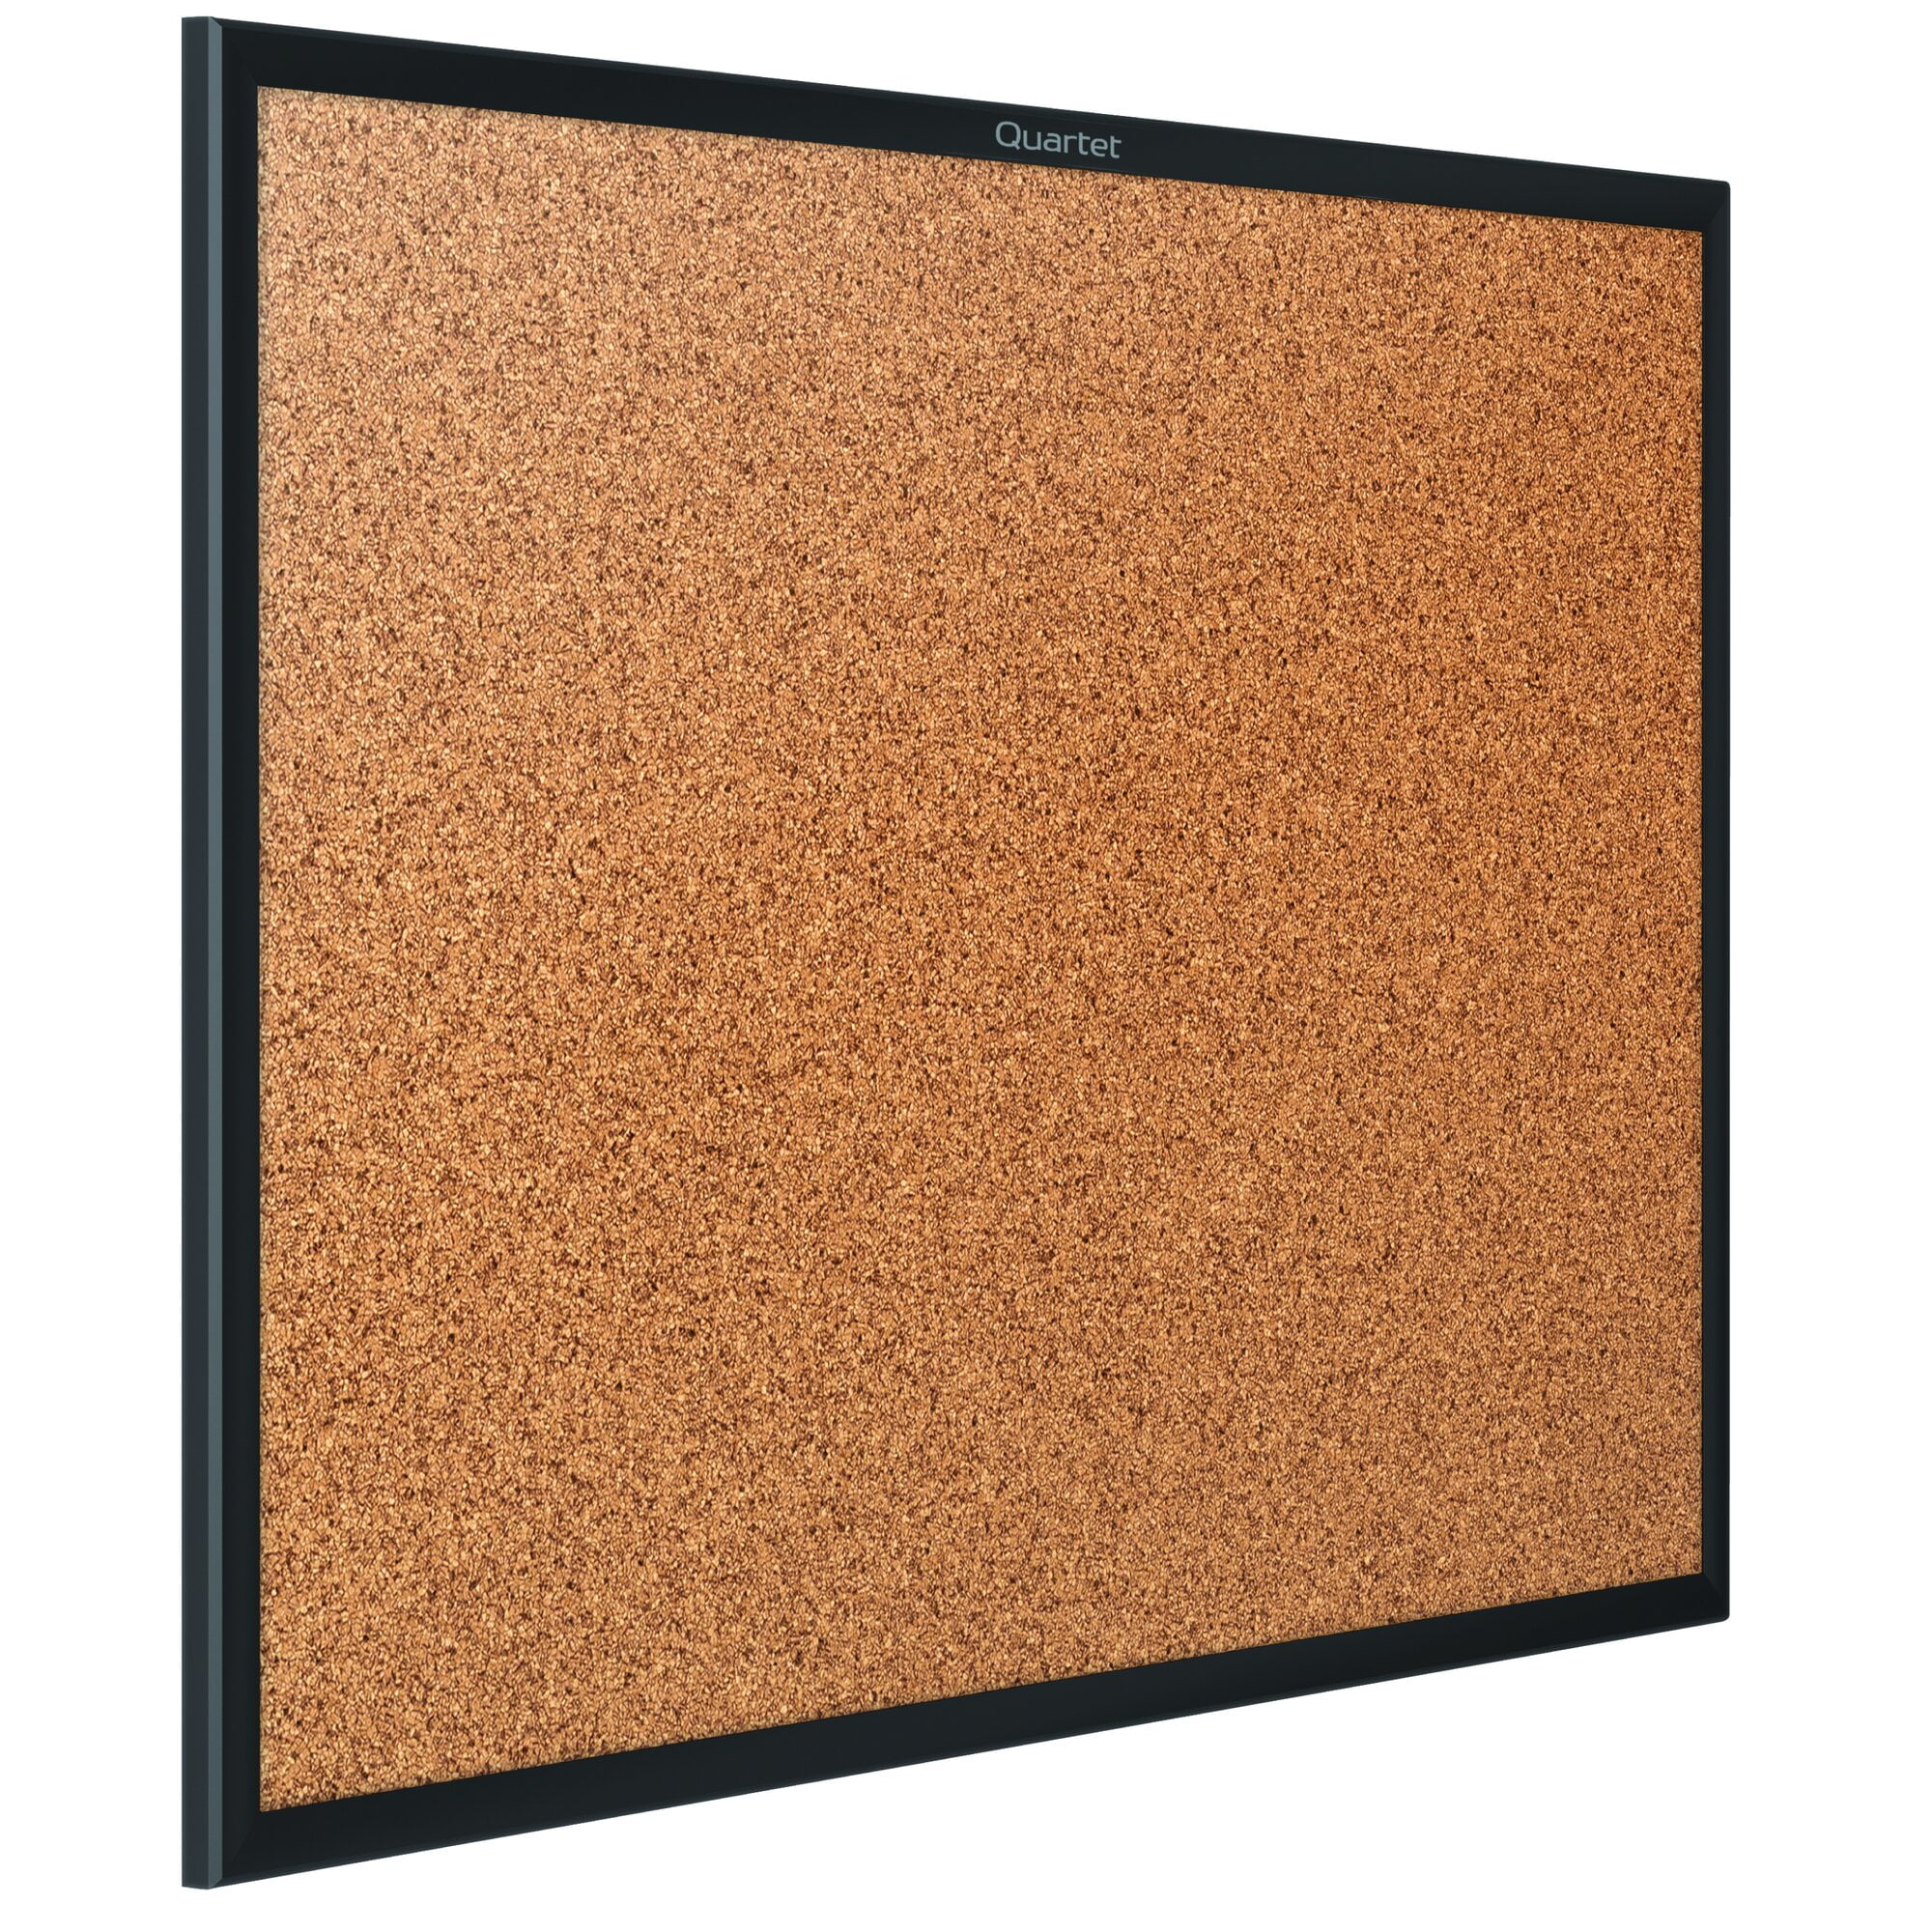 2305 Aluminum Frame Quartet Cork Board Corkboard Bulletin Board 5 x 3 